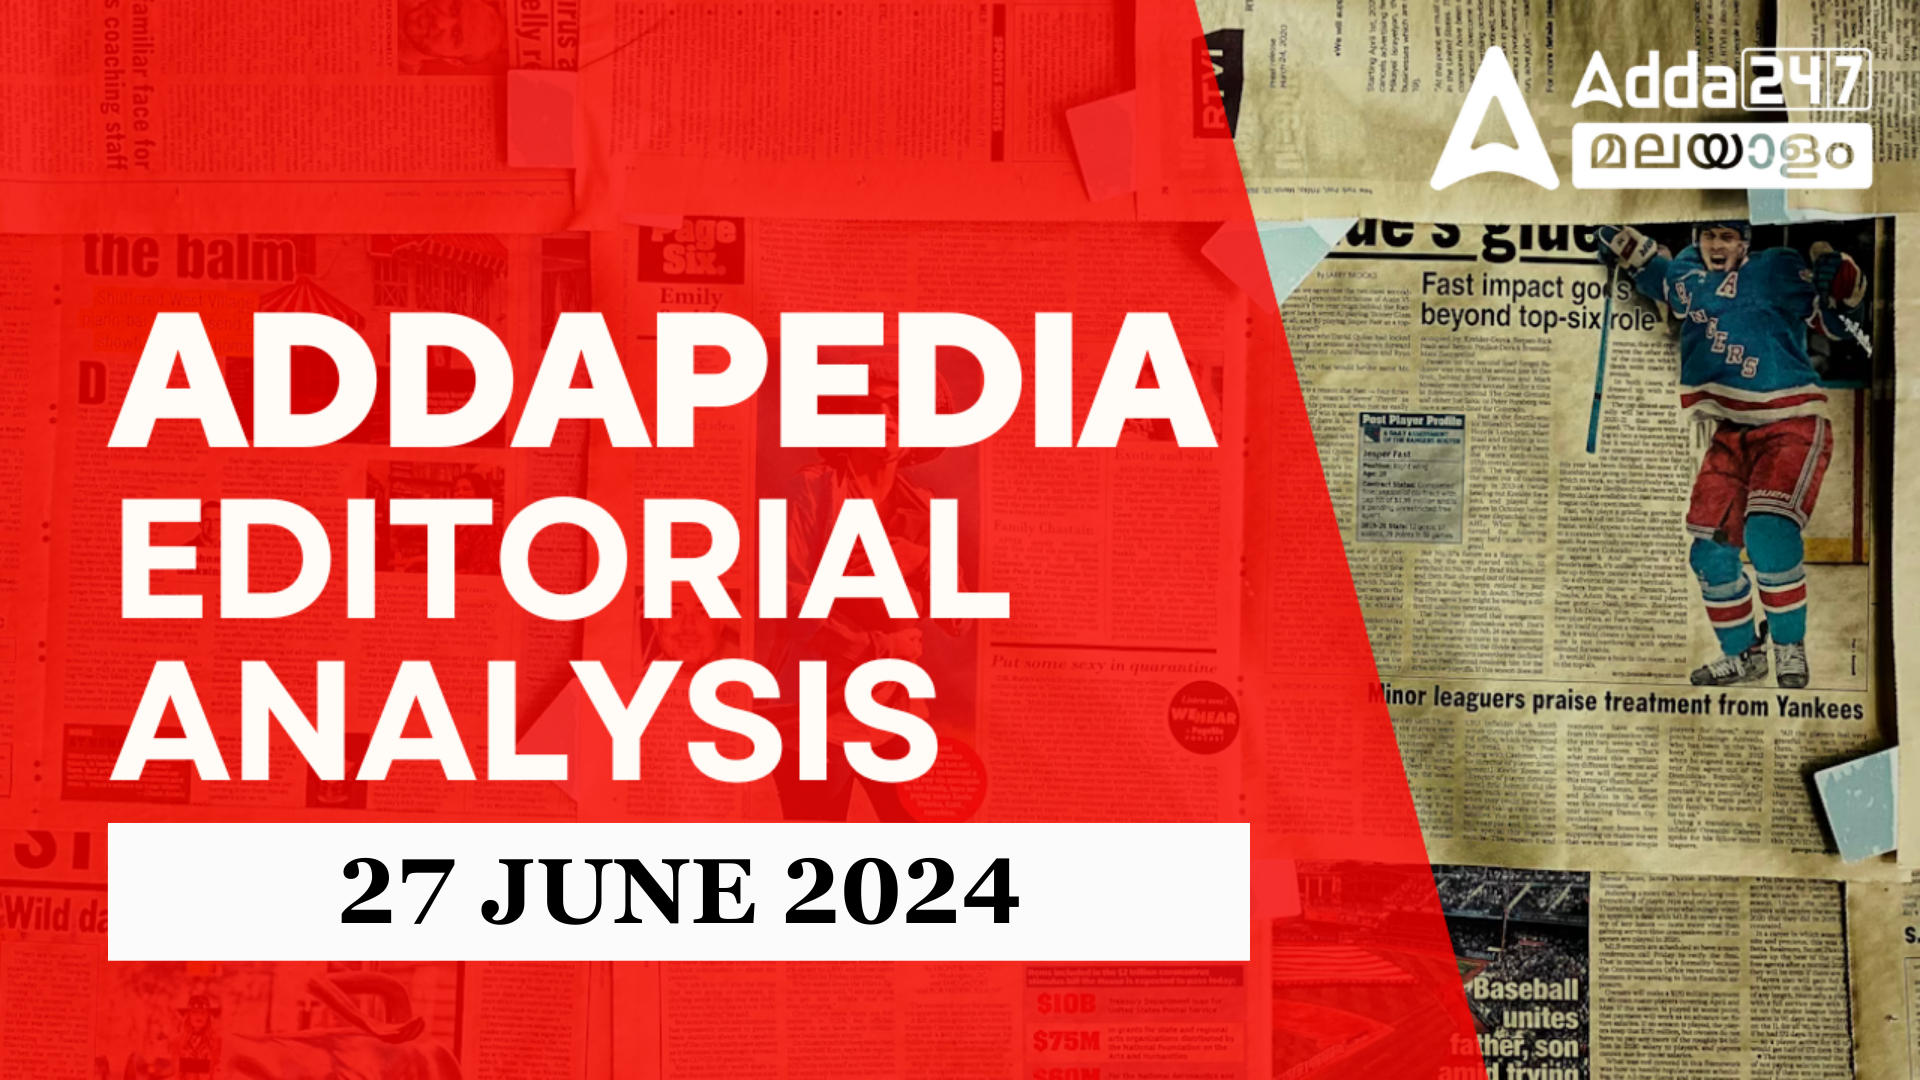 Addapedia Editorial Analysis: Daily News Editorial PDF, 27 June 2024